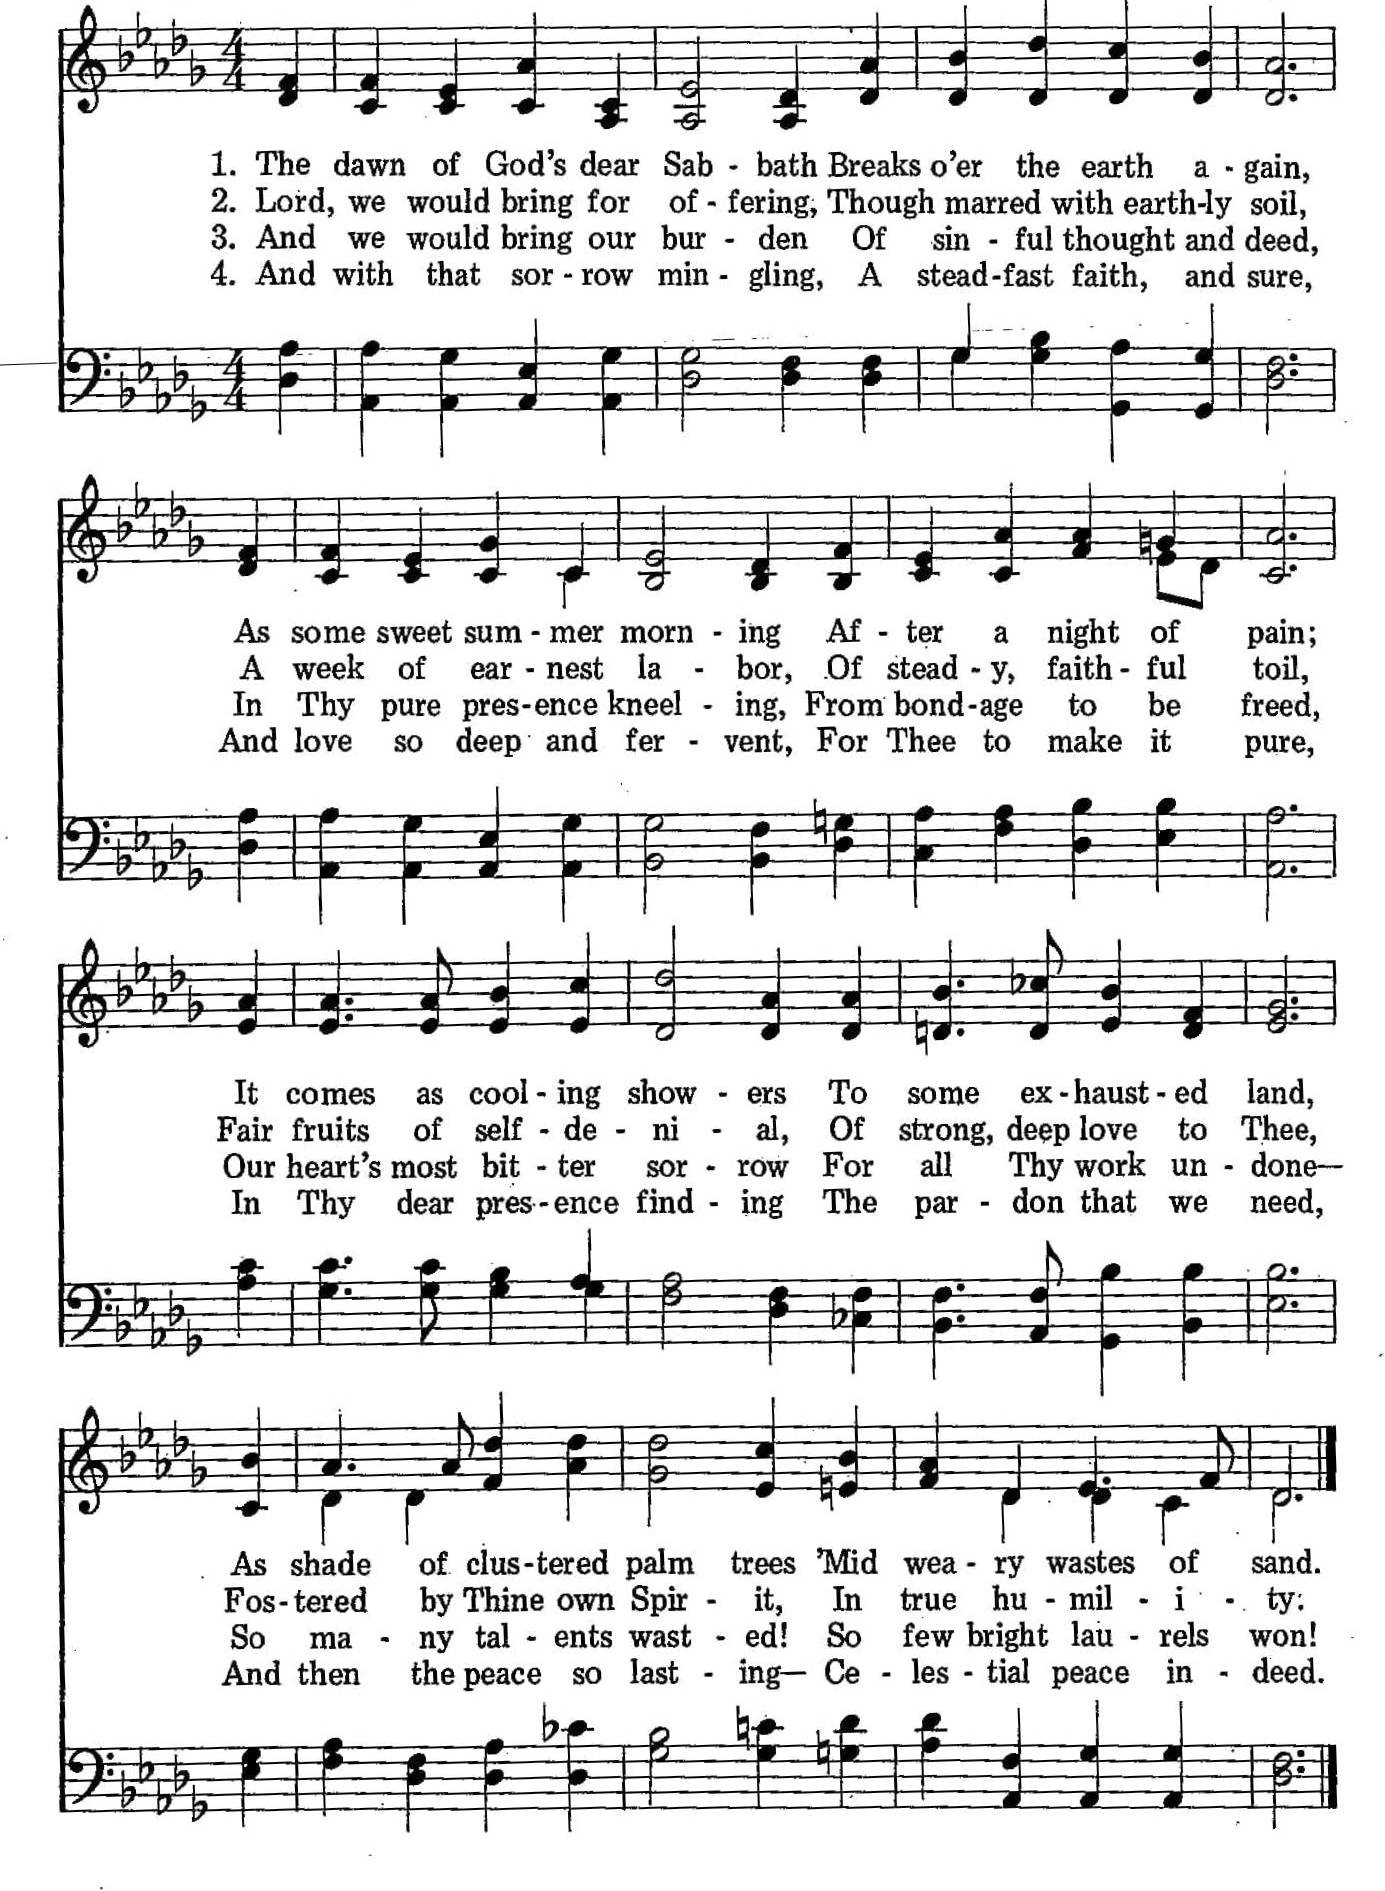 040 – The Dawn of God's Dear Sabbath sheet music